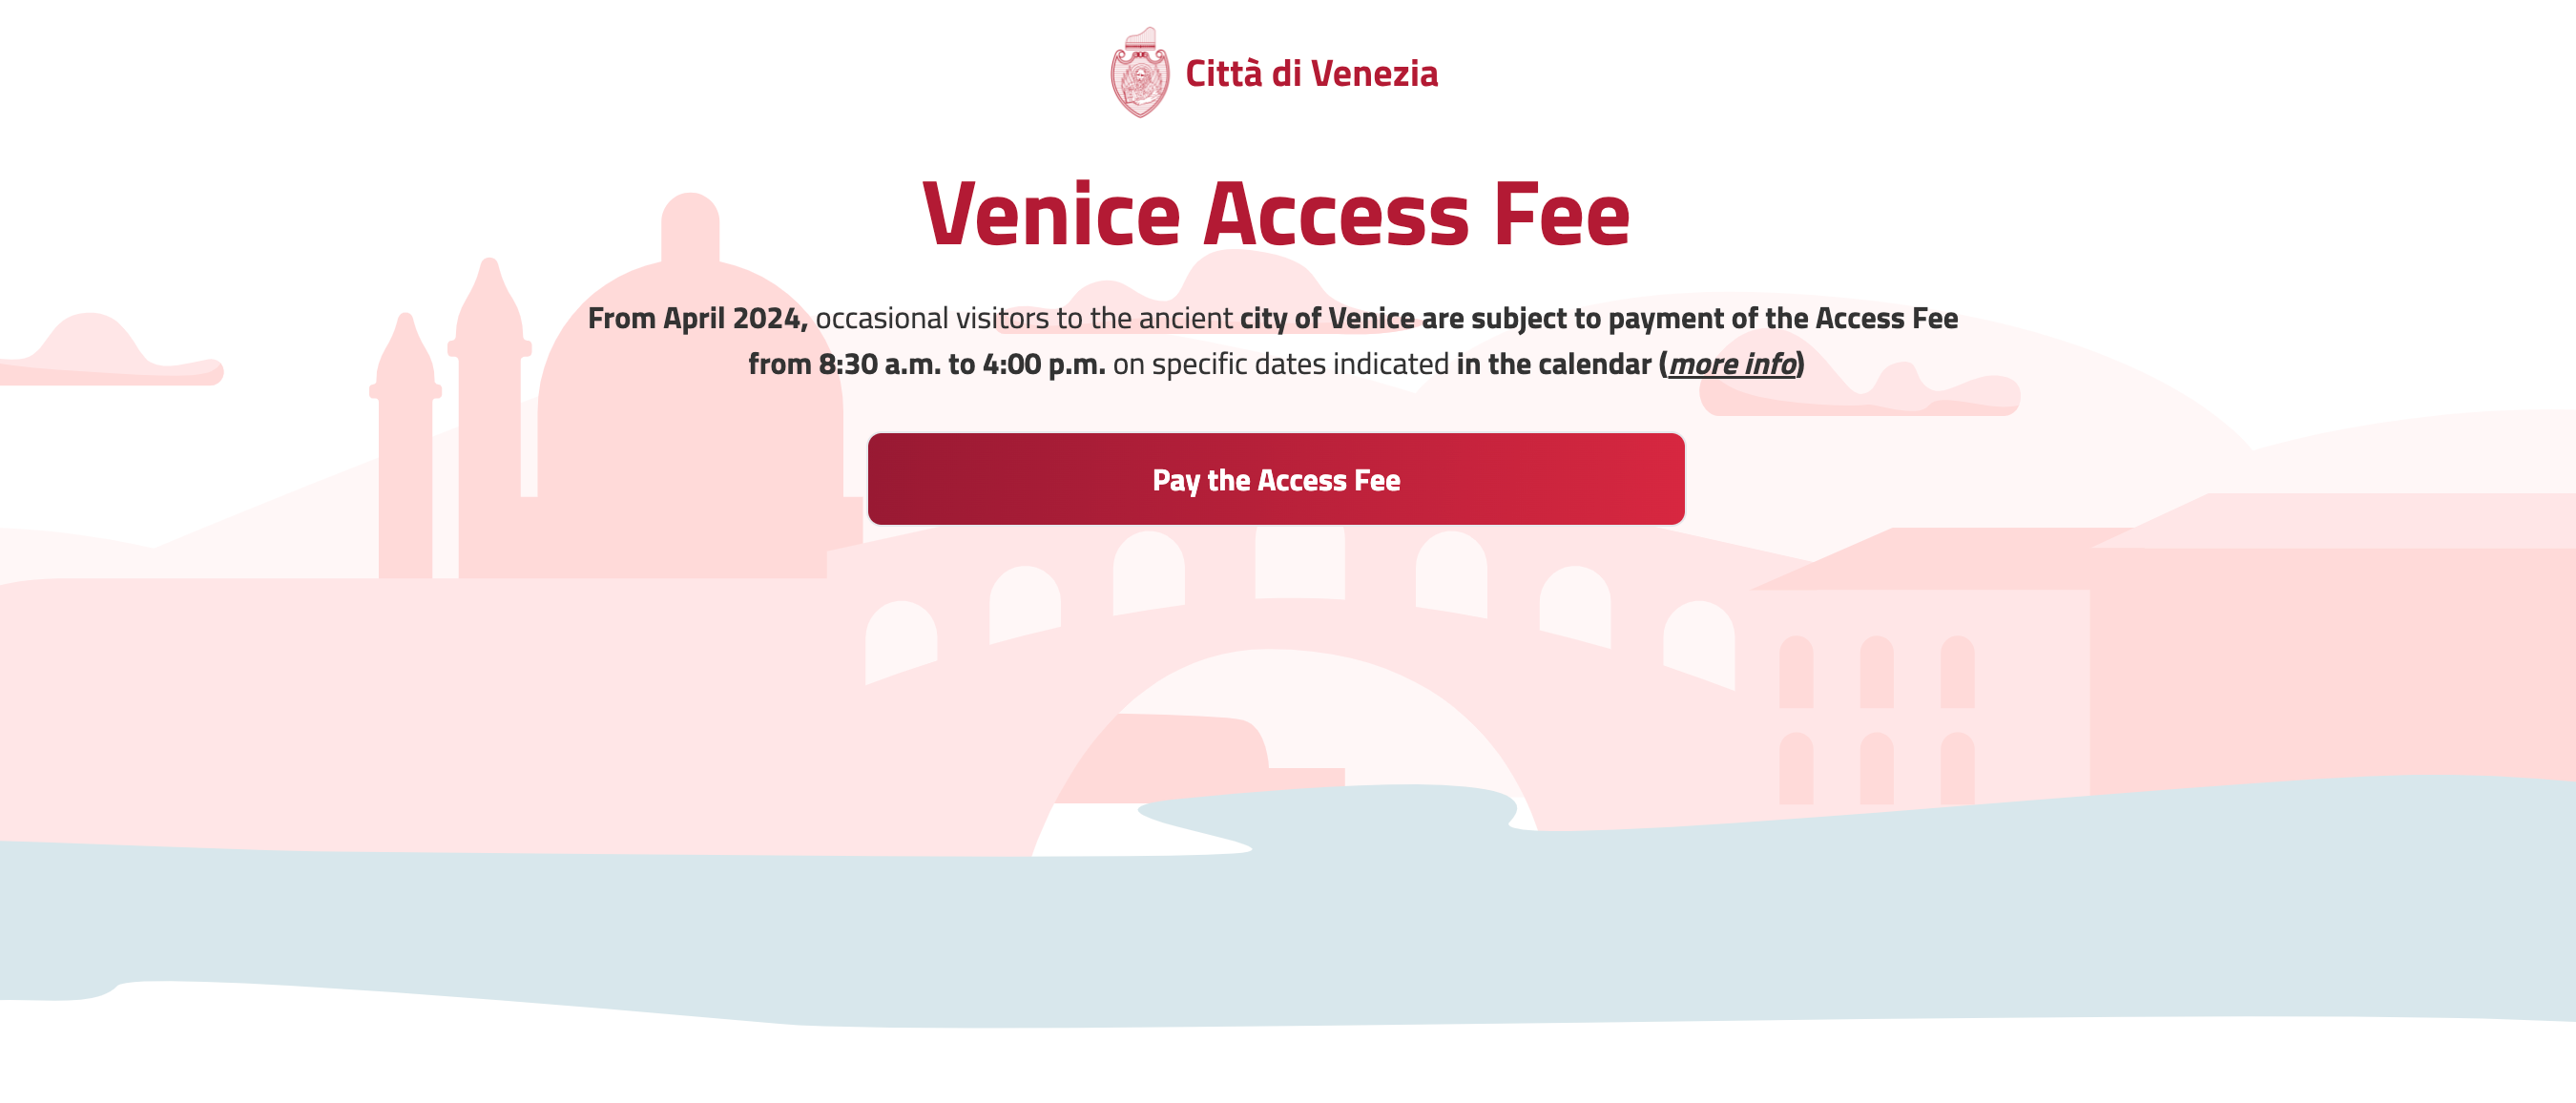 venice access fee info